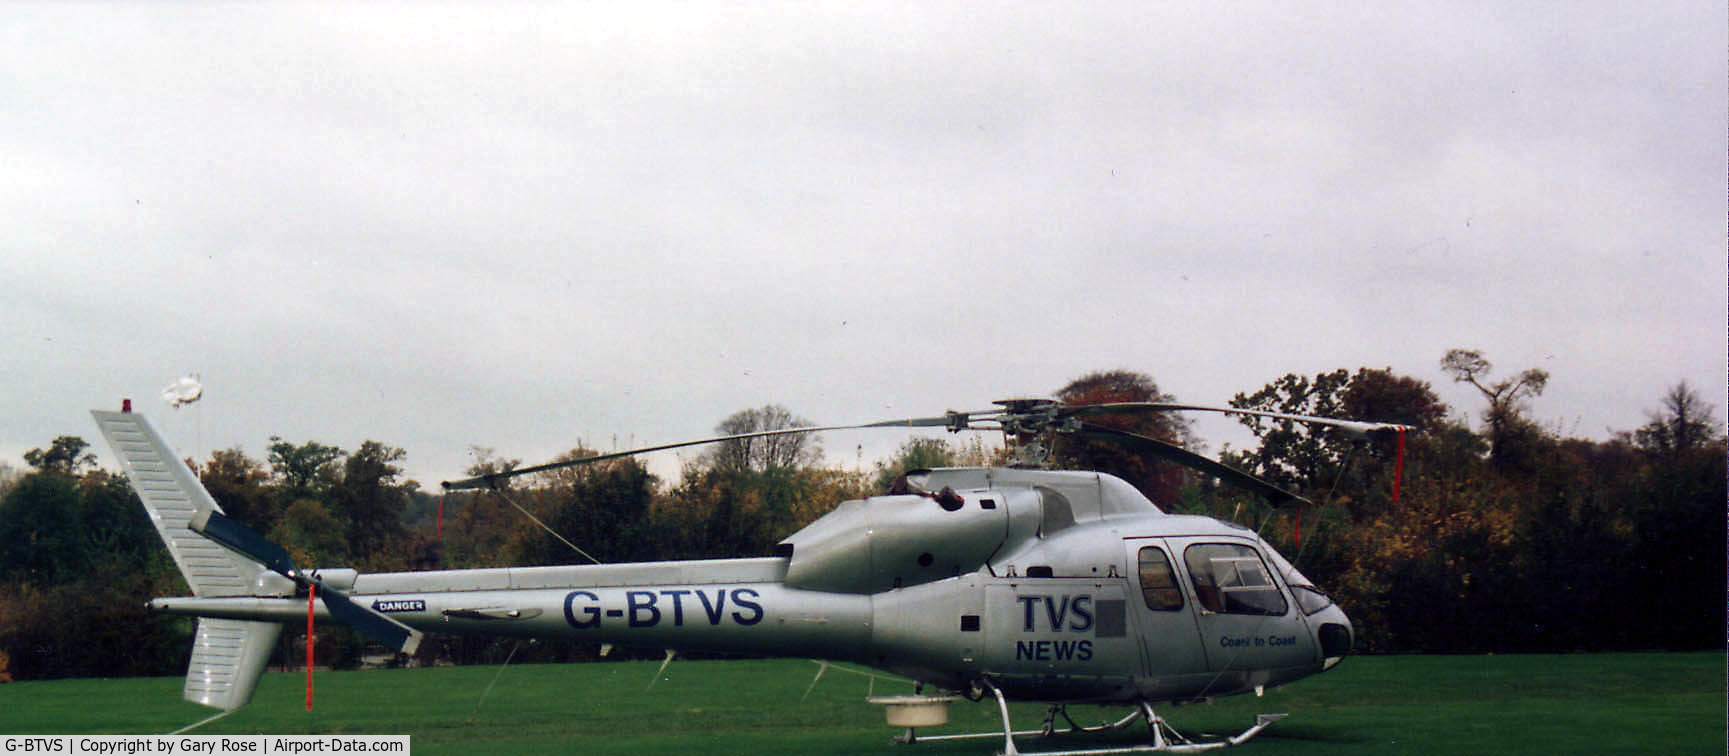 G-BTVS, 1982 Aérospatiale AS-355F-1 Ecureuil 2 C/N 5249, Taken at The Maidstone TV Studios - 1988?